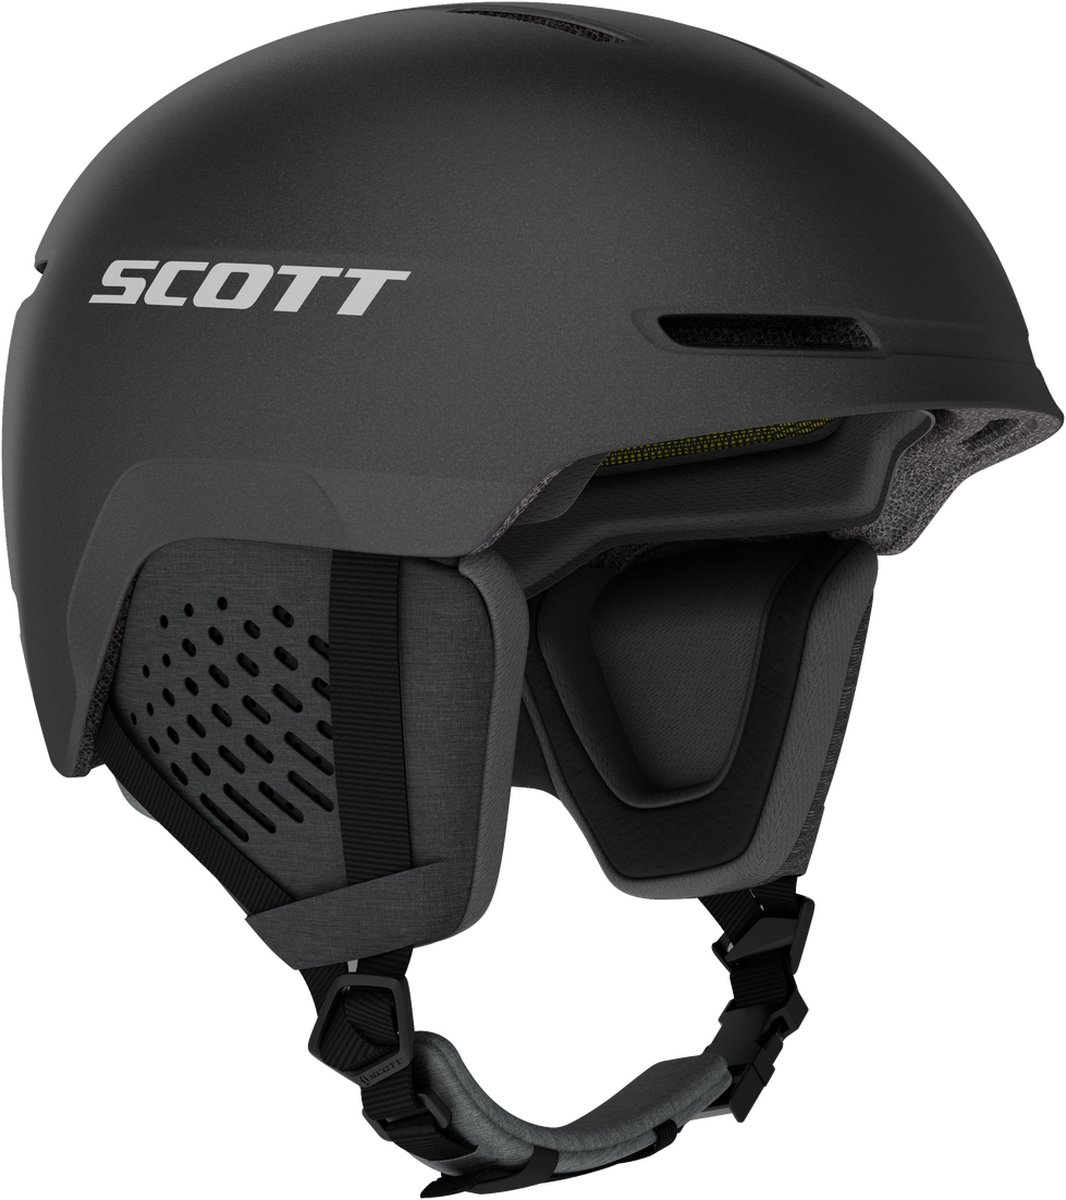 Scott Track skihelm - zwart - maat L (59-61 cm)